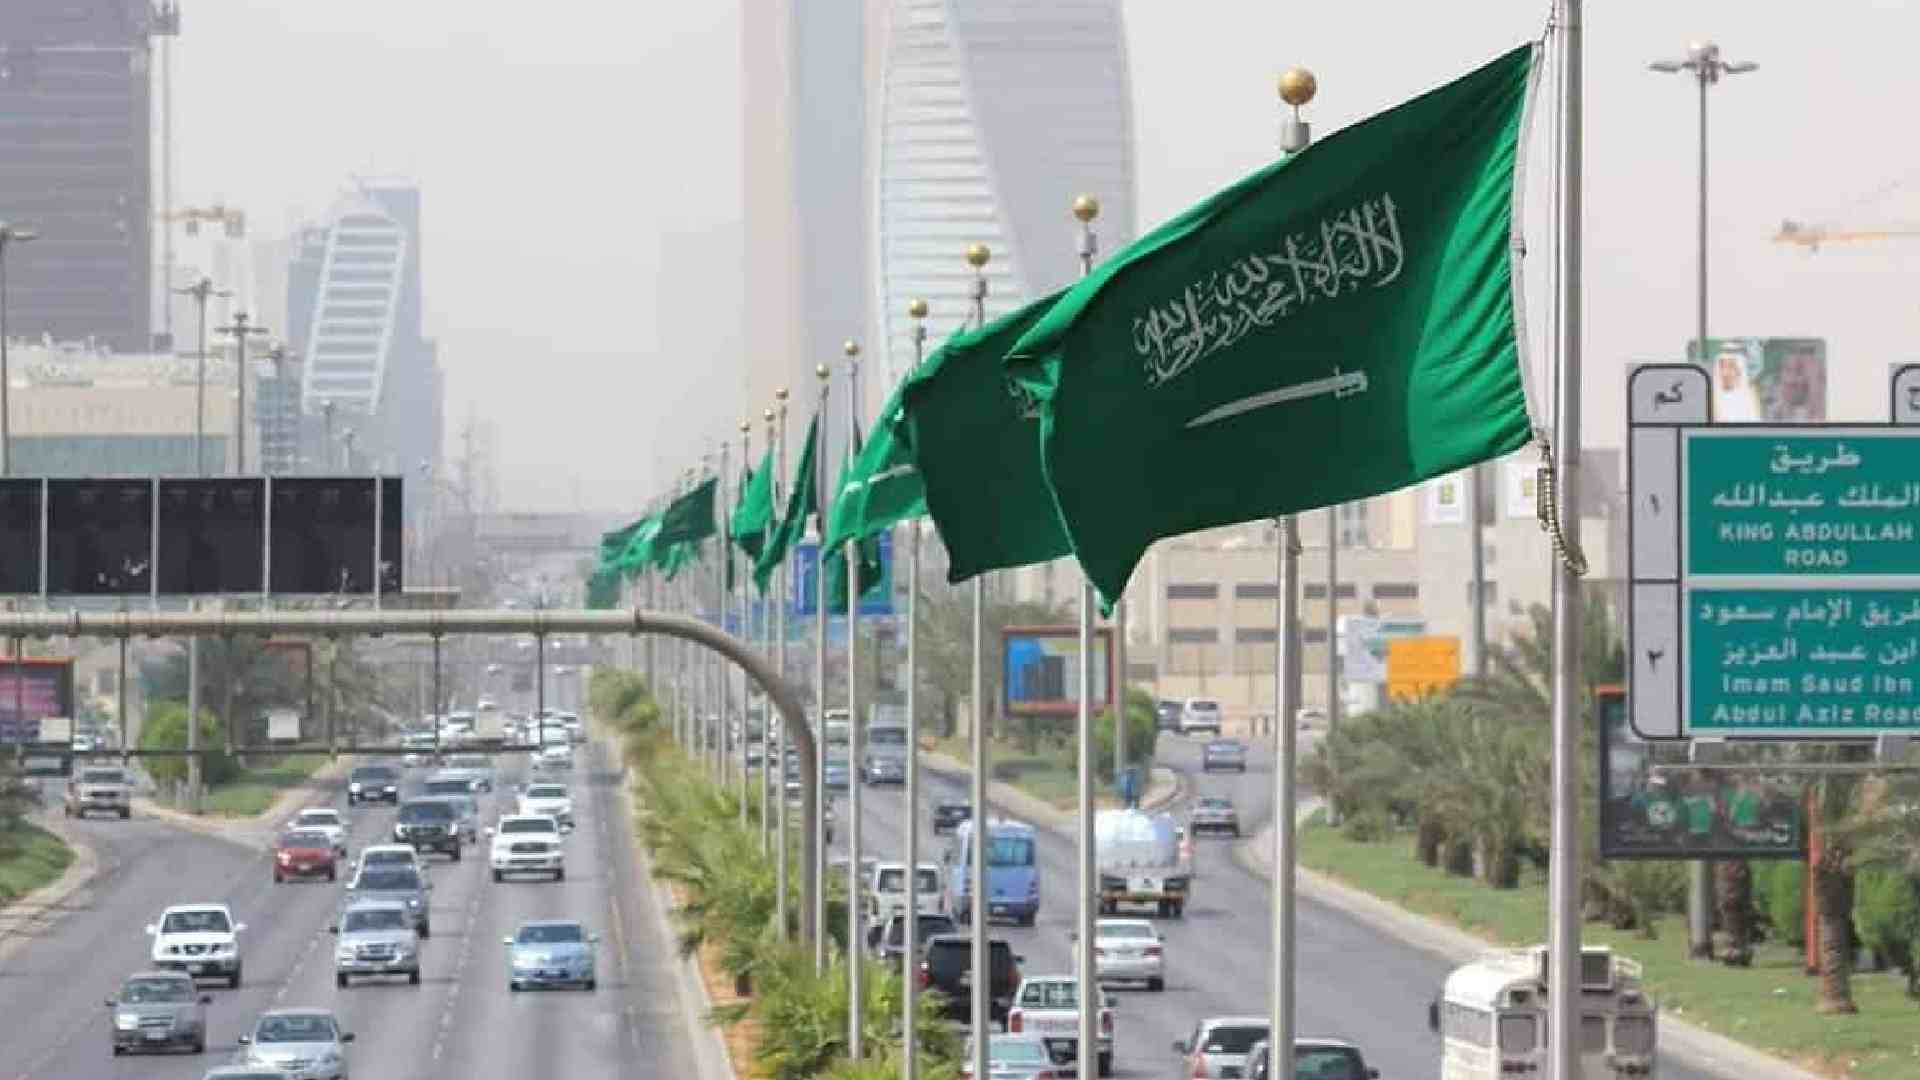 best opportunities in Saudi Arabia